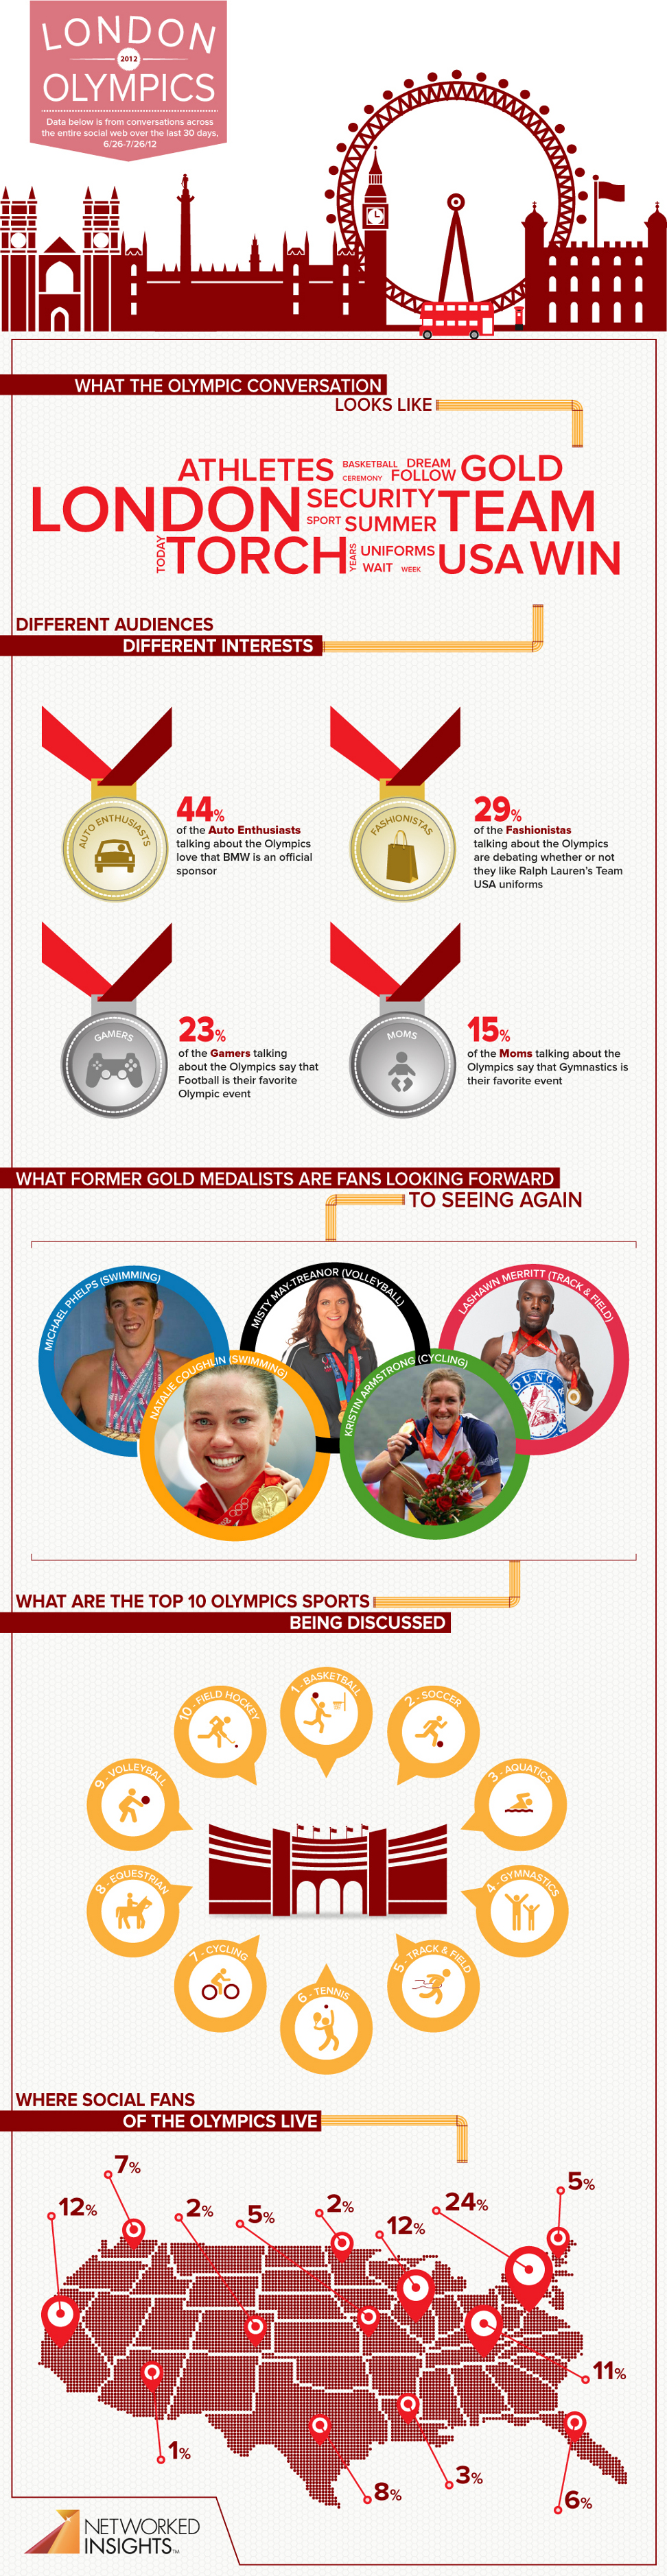 0727 London Olympics Infographic